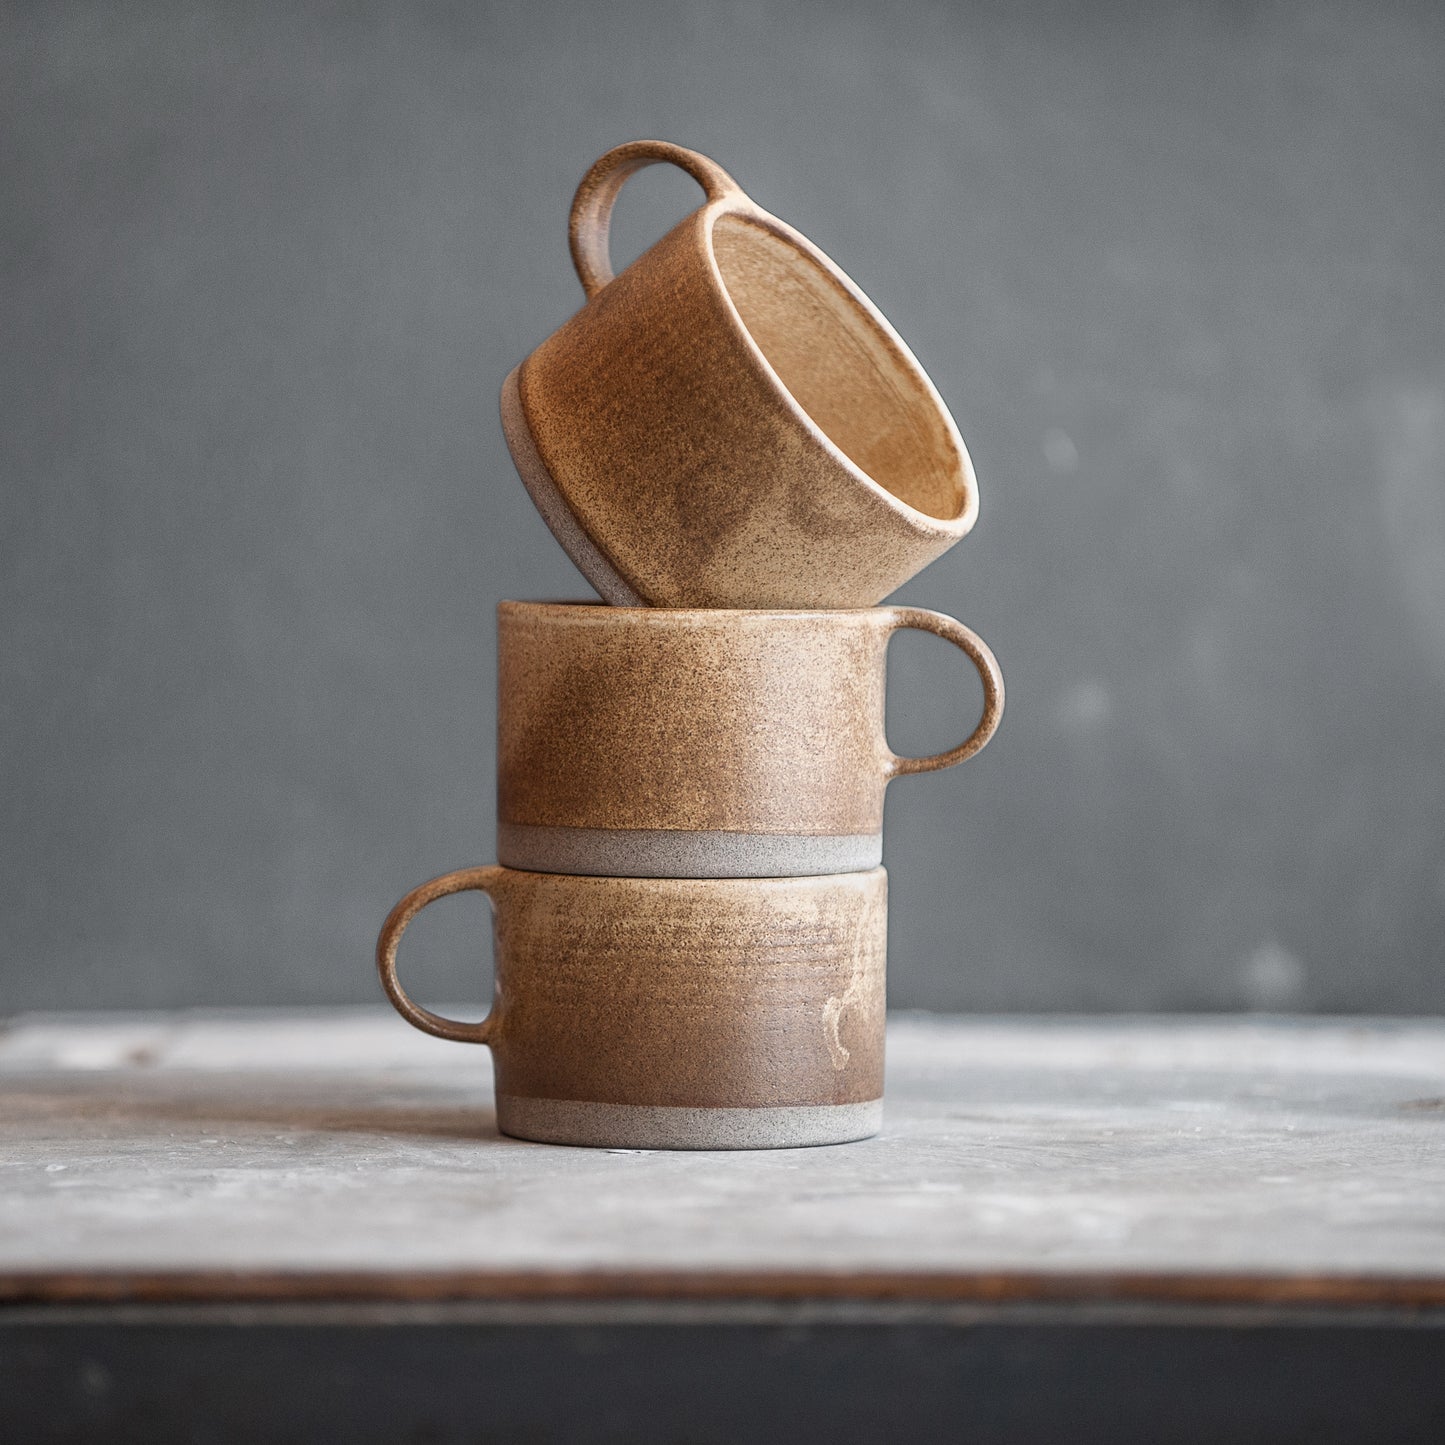 coffee or tea mug in warm beige